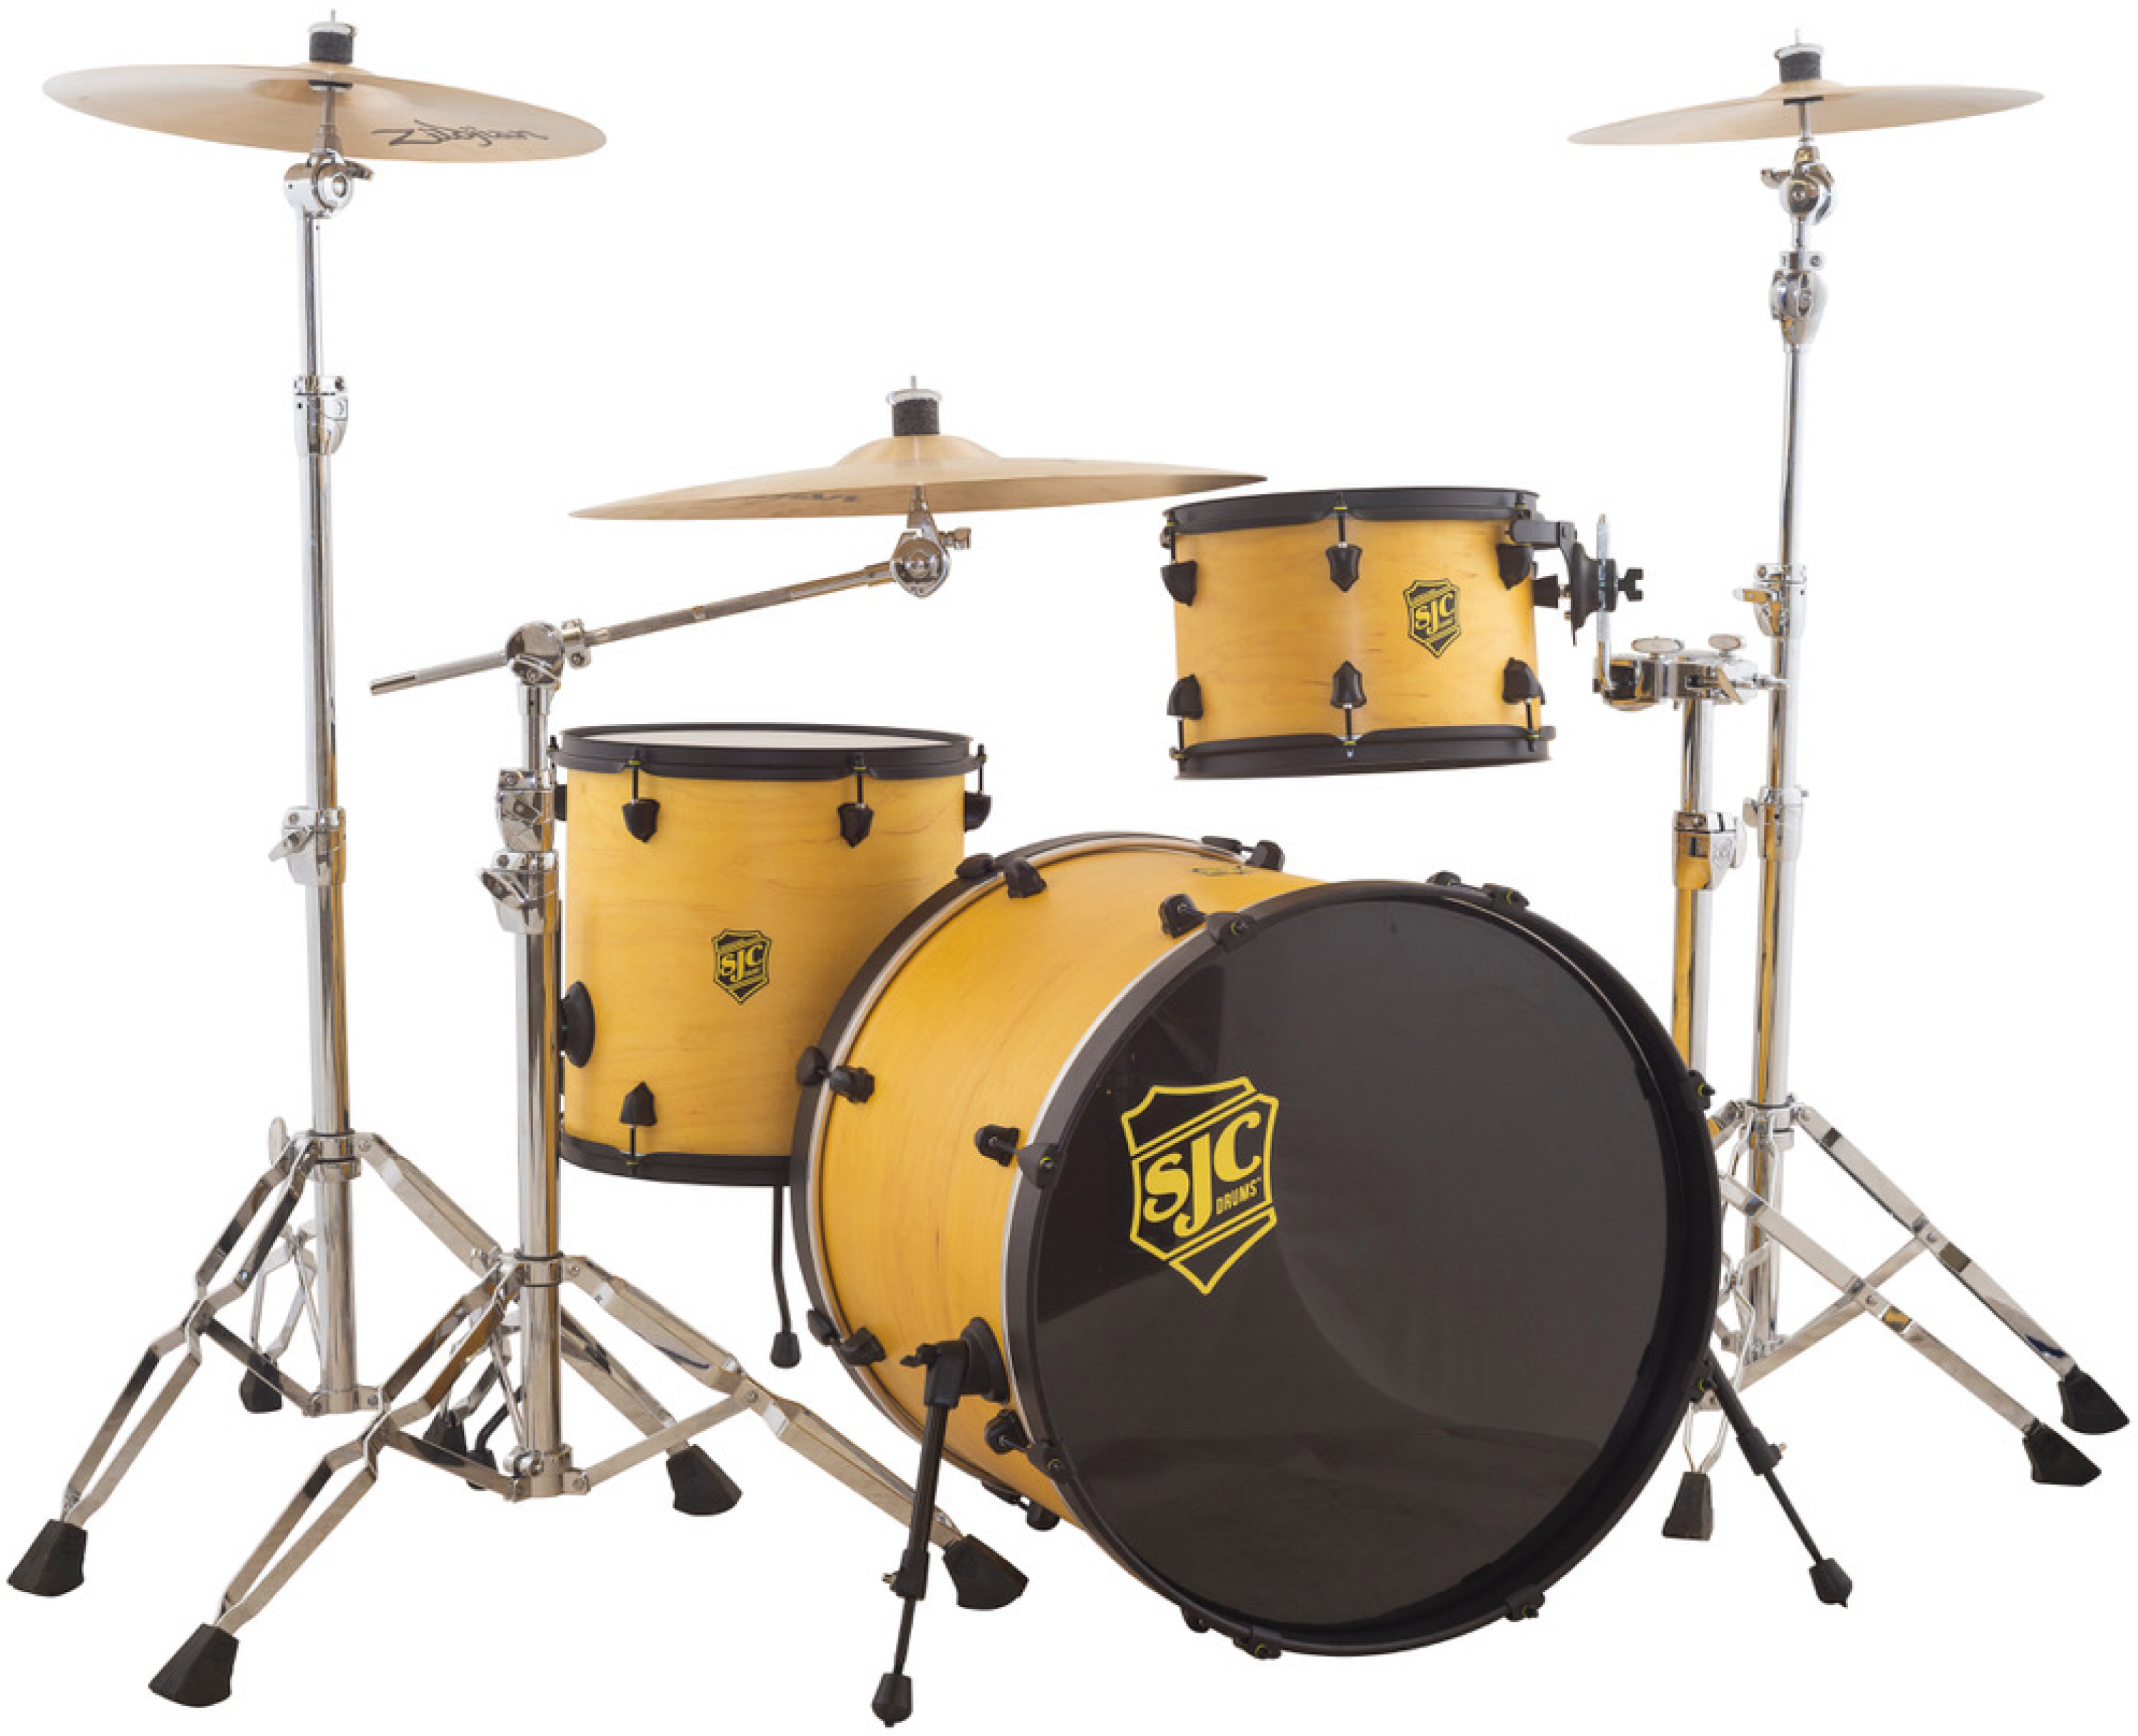 SJC Custom Drums Pathfinder Series 3-piece Shell Pack - Cyber Yellow Satin